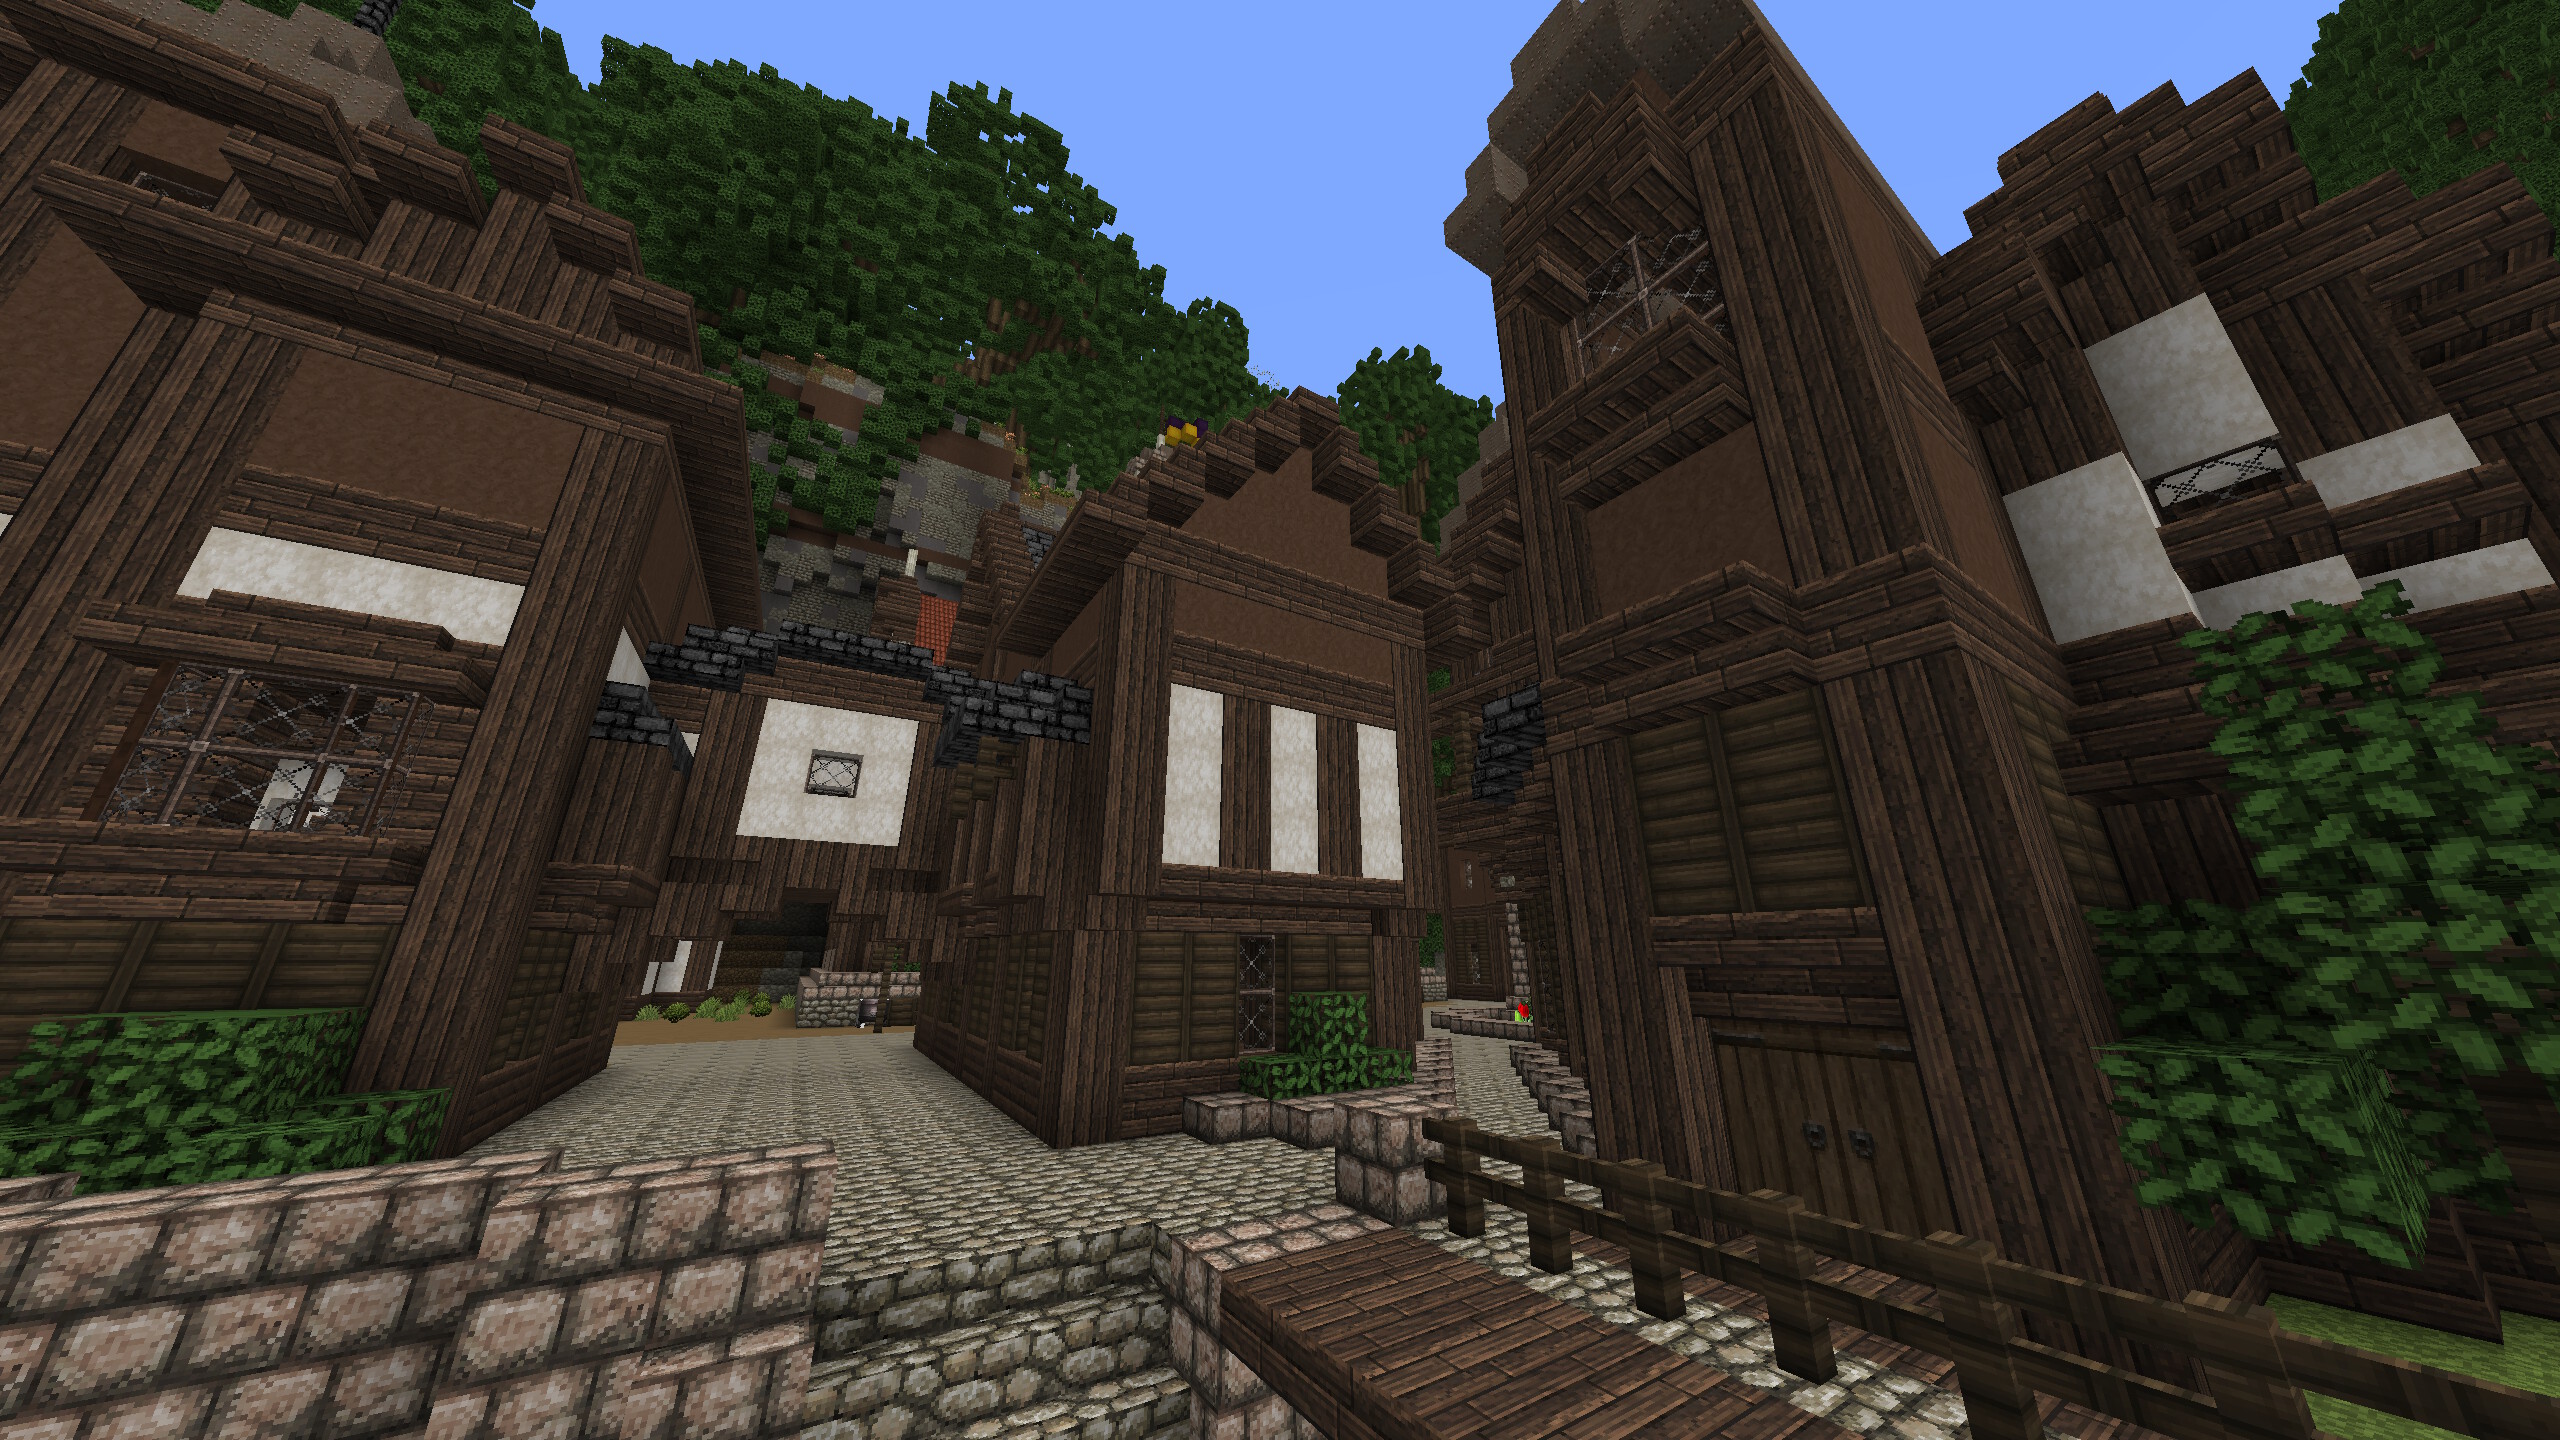 Minecraft Village Would Make A Nice Holiday Spot